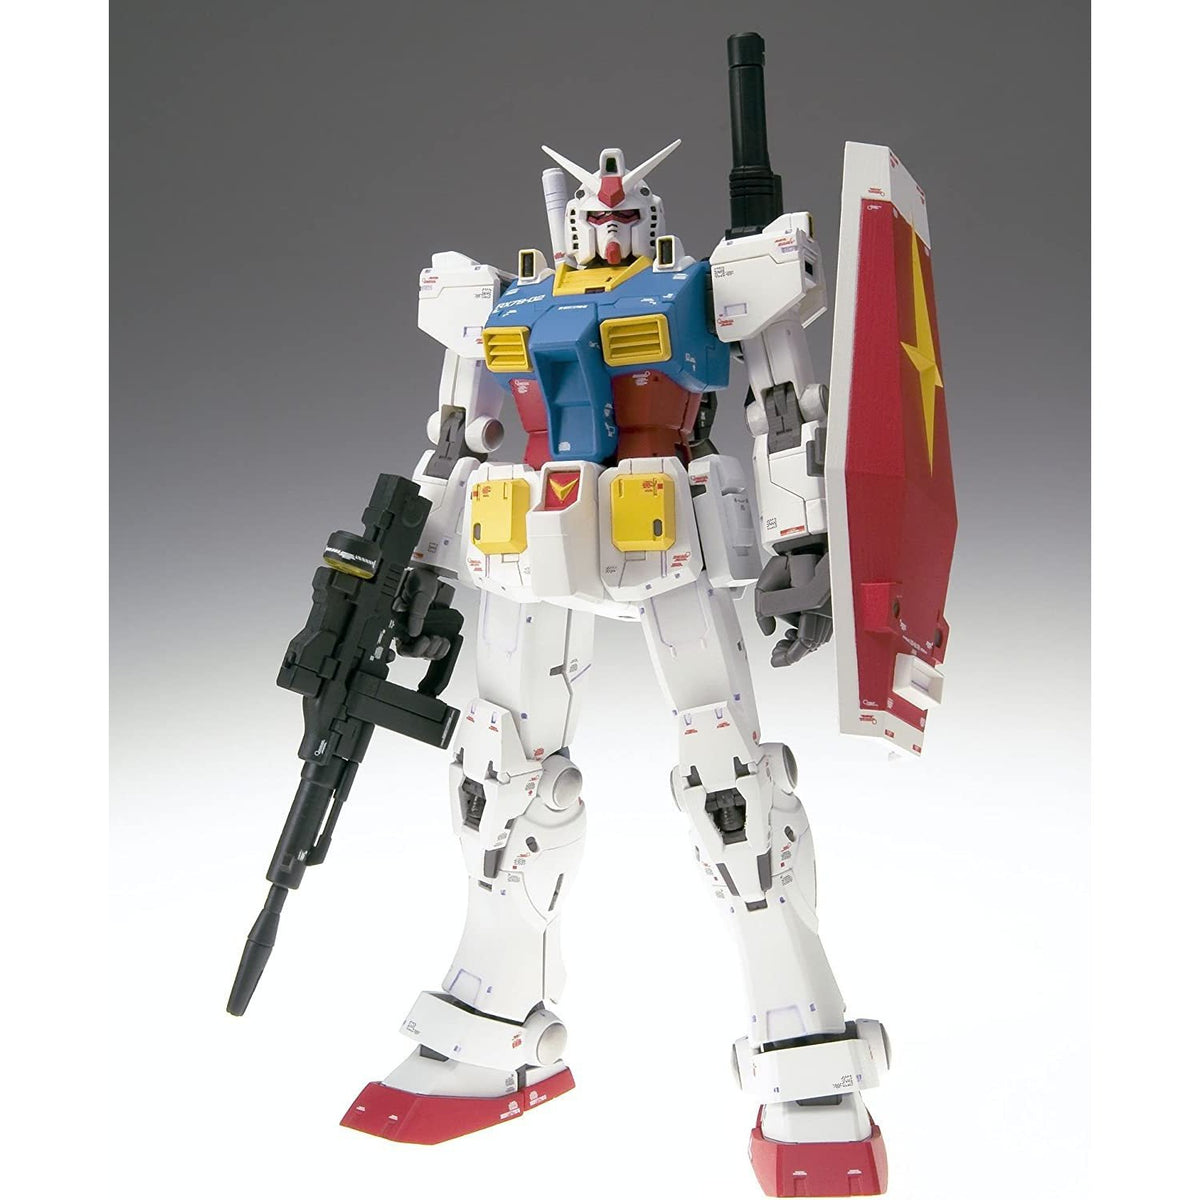 Gundam Fix Figuration Metal Composite RX-78-02 Gundam The Origin #1009-Bandai-Ace Cards &amp; Collectibles